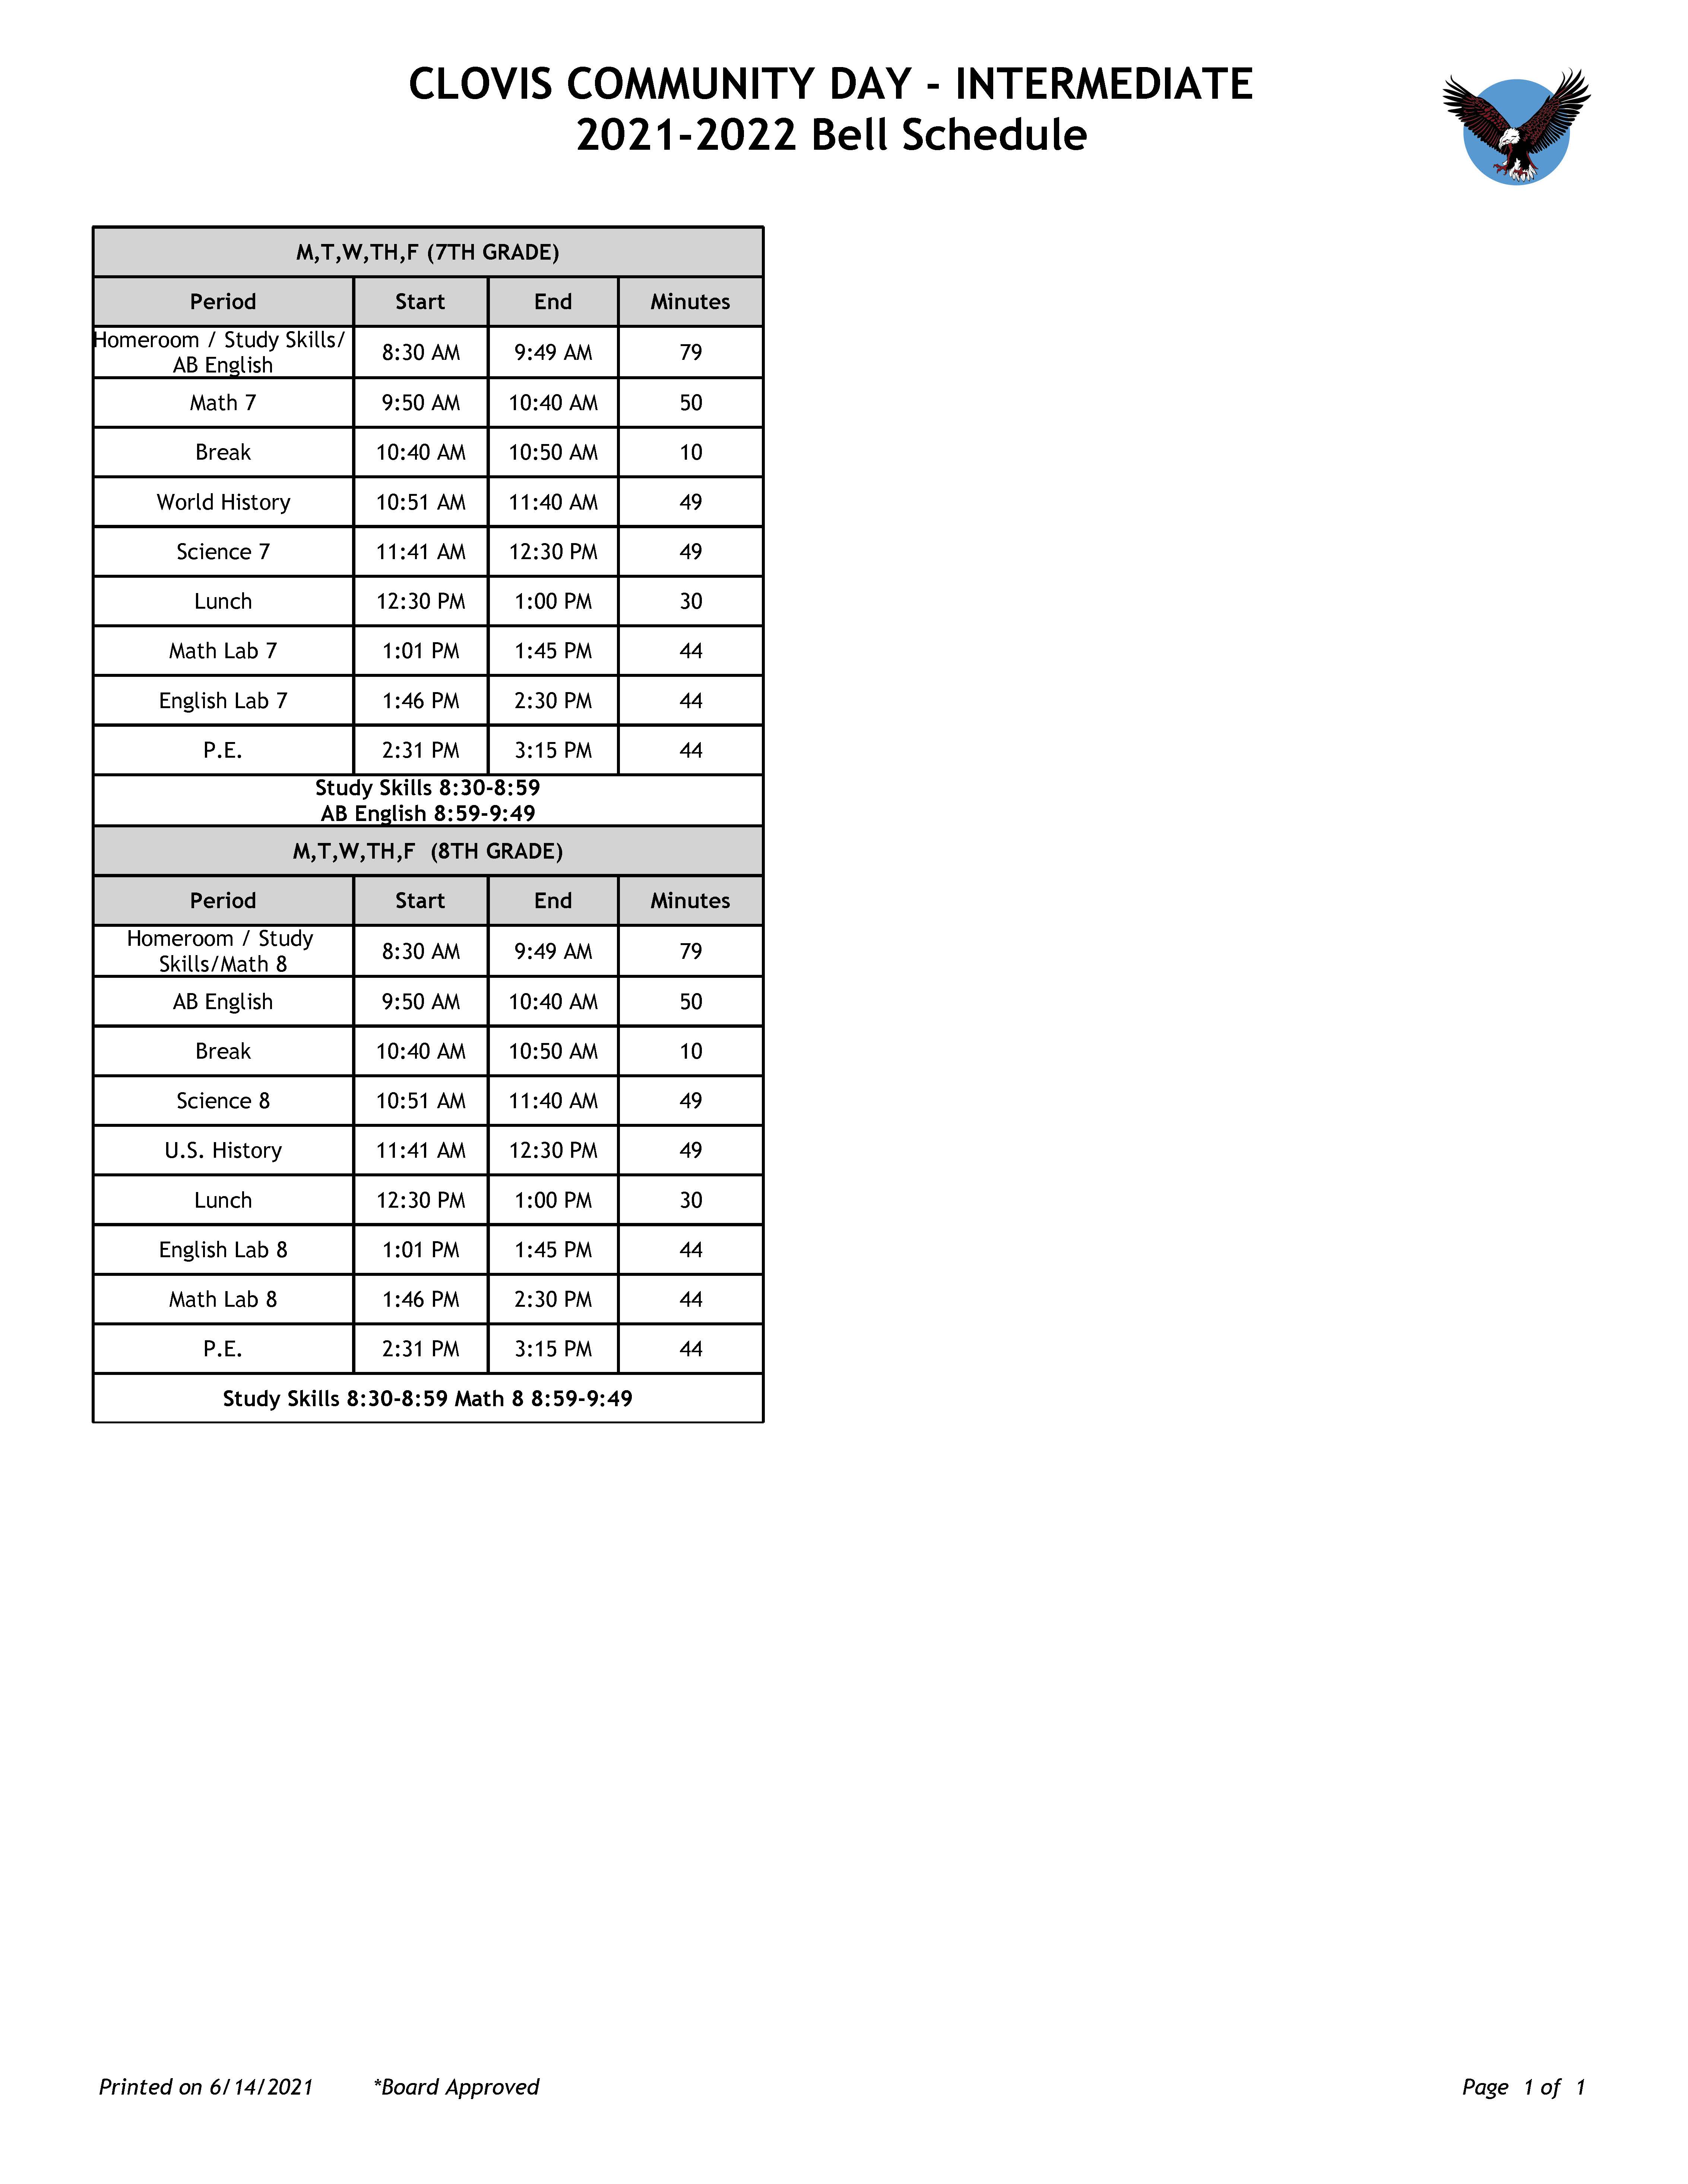 CCDS Intermediate Bell Schedule - full copy downloadable below